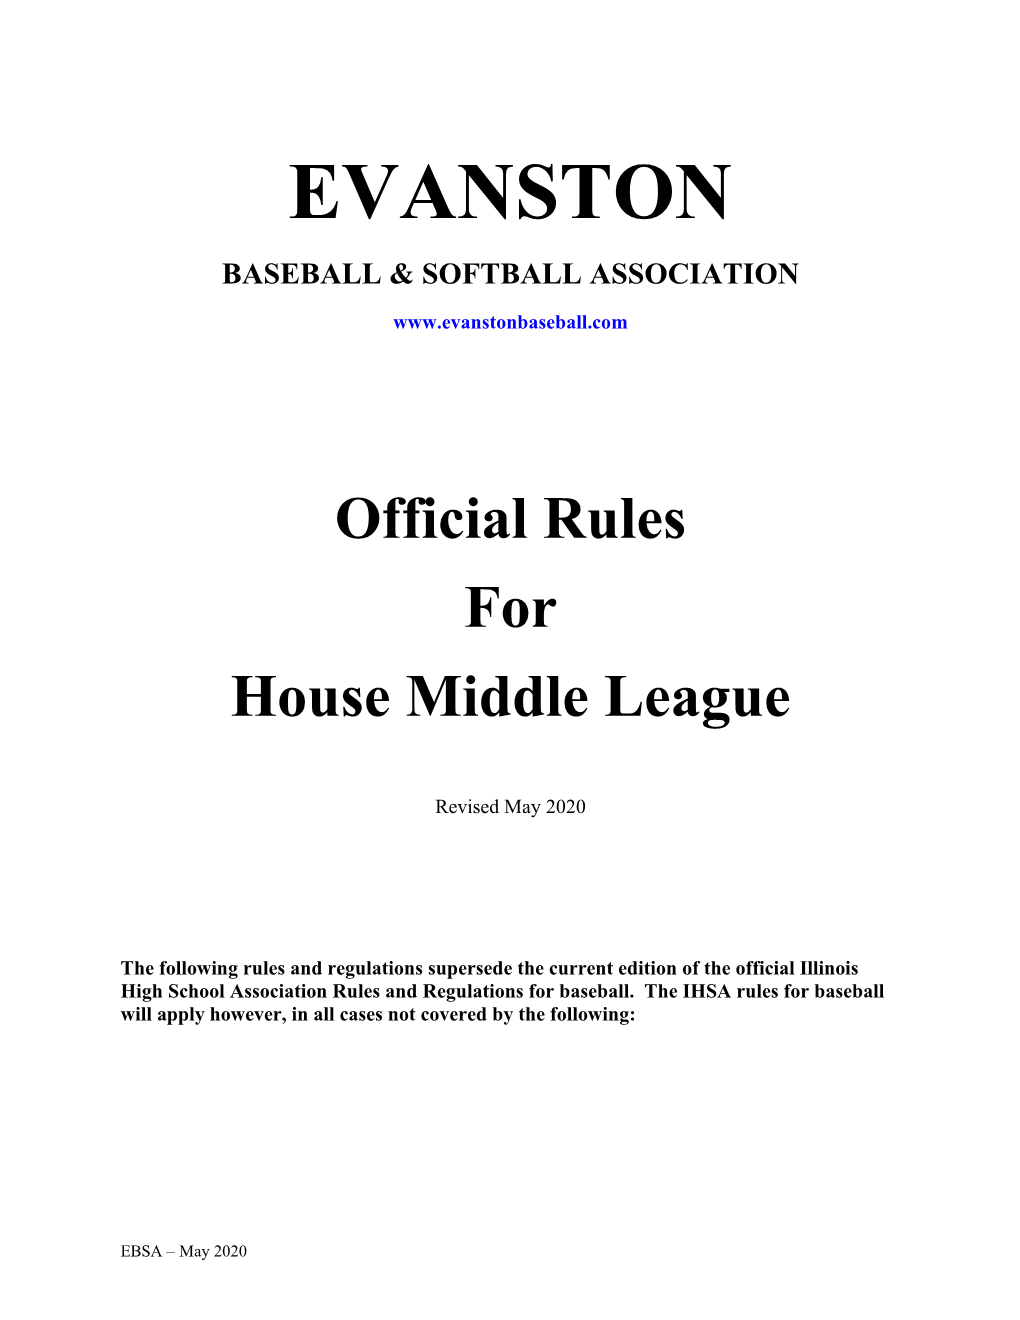 Evanston Baseball & Softball Association